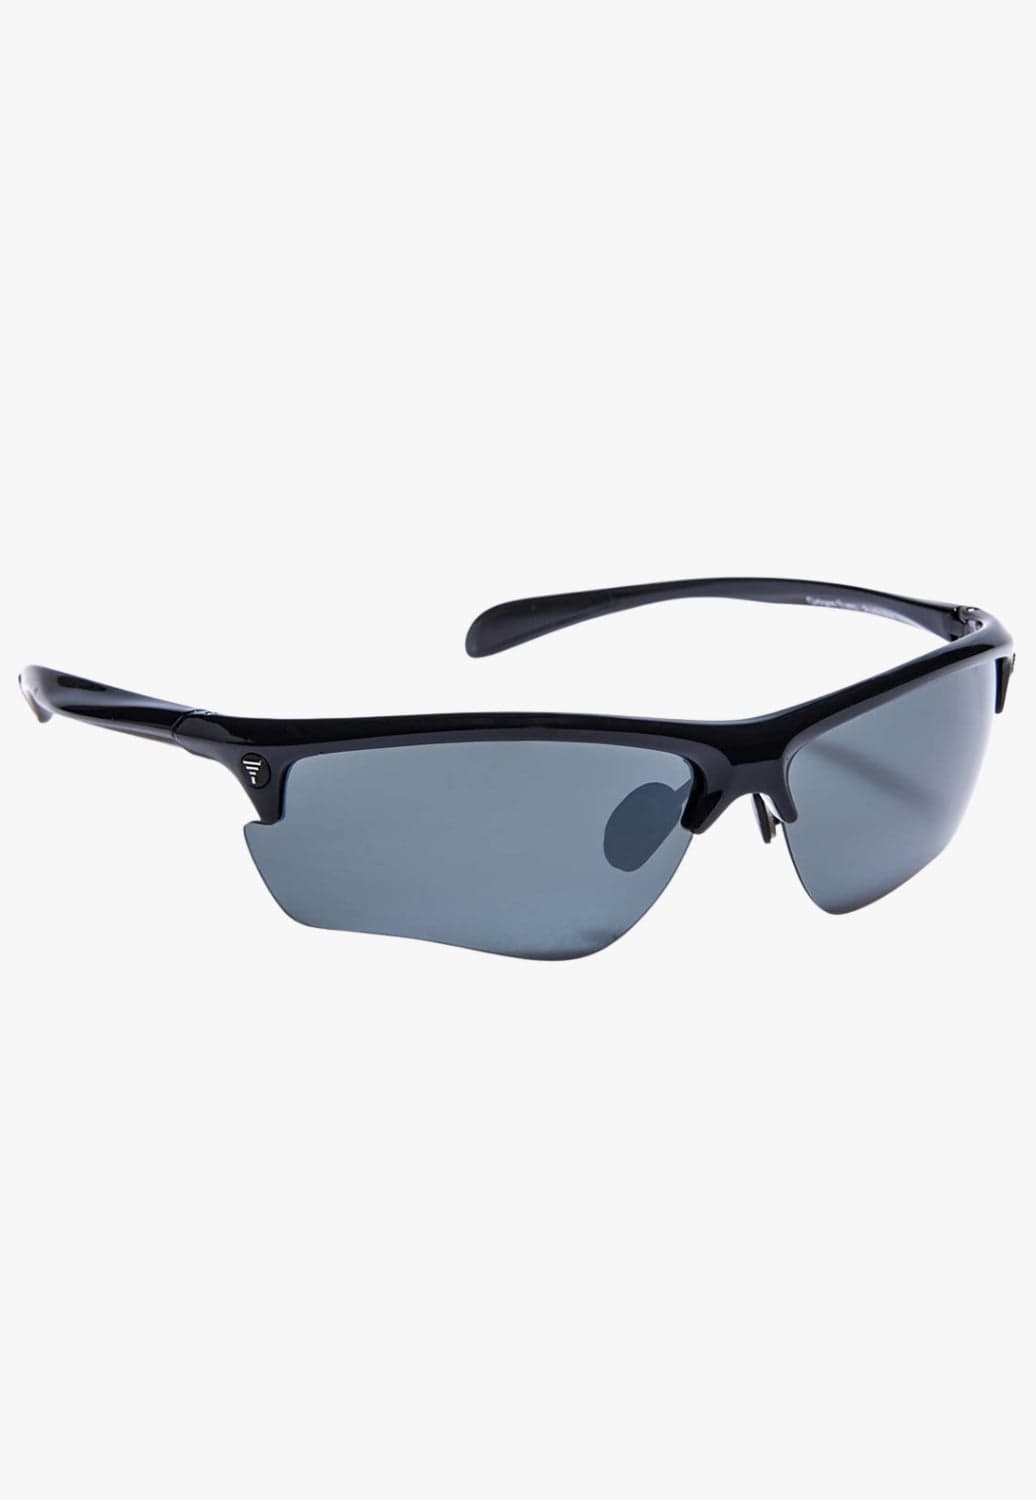 Gidgee Eyes ACCESSORIES-Sunglasses OSFA / Black Gidgee Eyes Elite Sunglasses